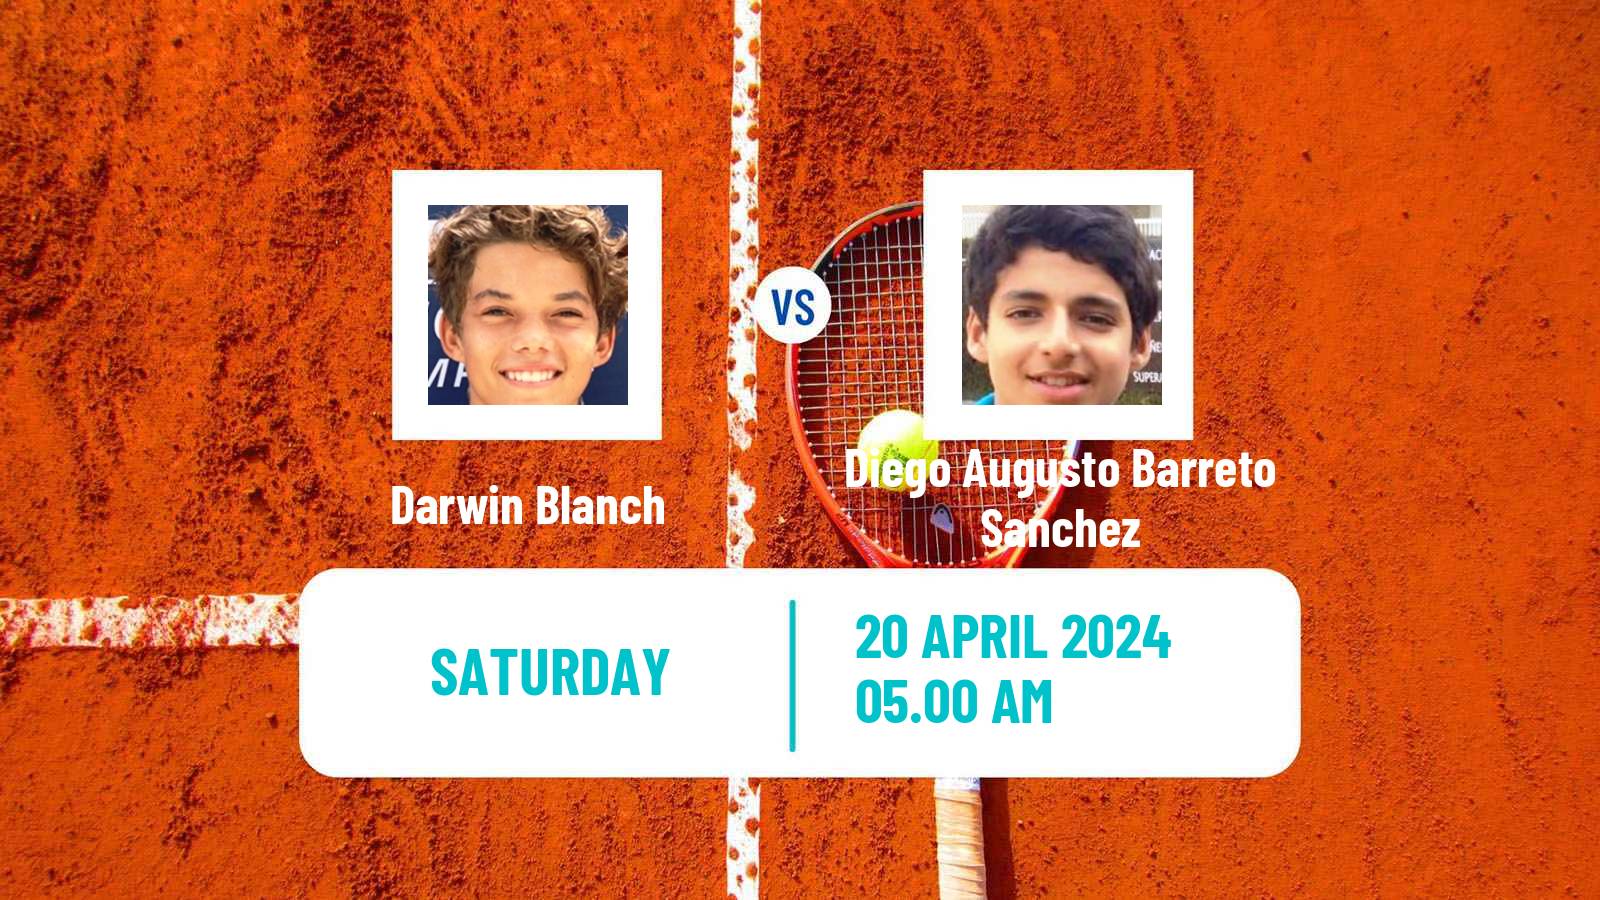 Tennis ITF M15 Telde 2 Men Darwin Blanch - Diego Augusto Barreto Sanchez